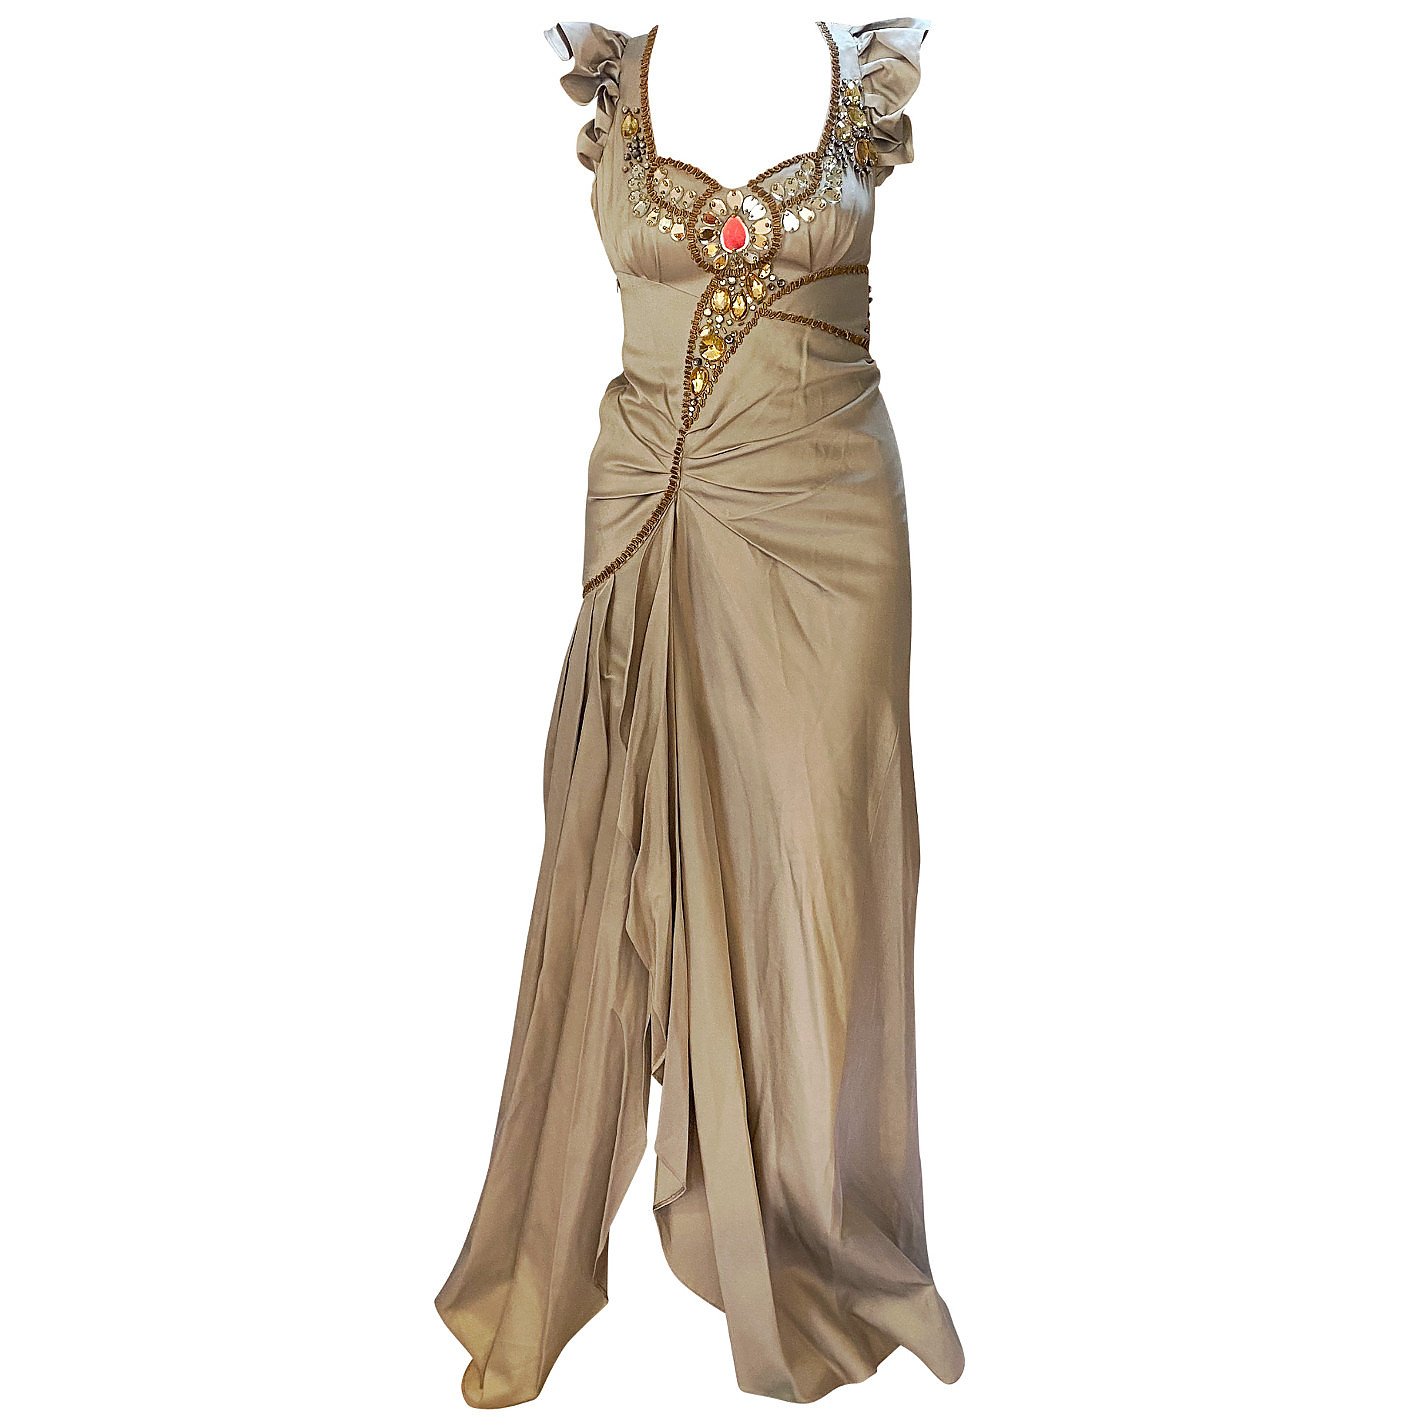 Temperley London Metallic Embellished Dress